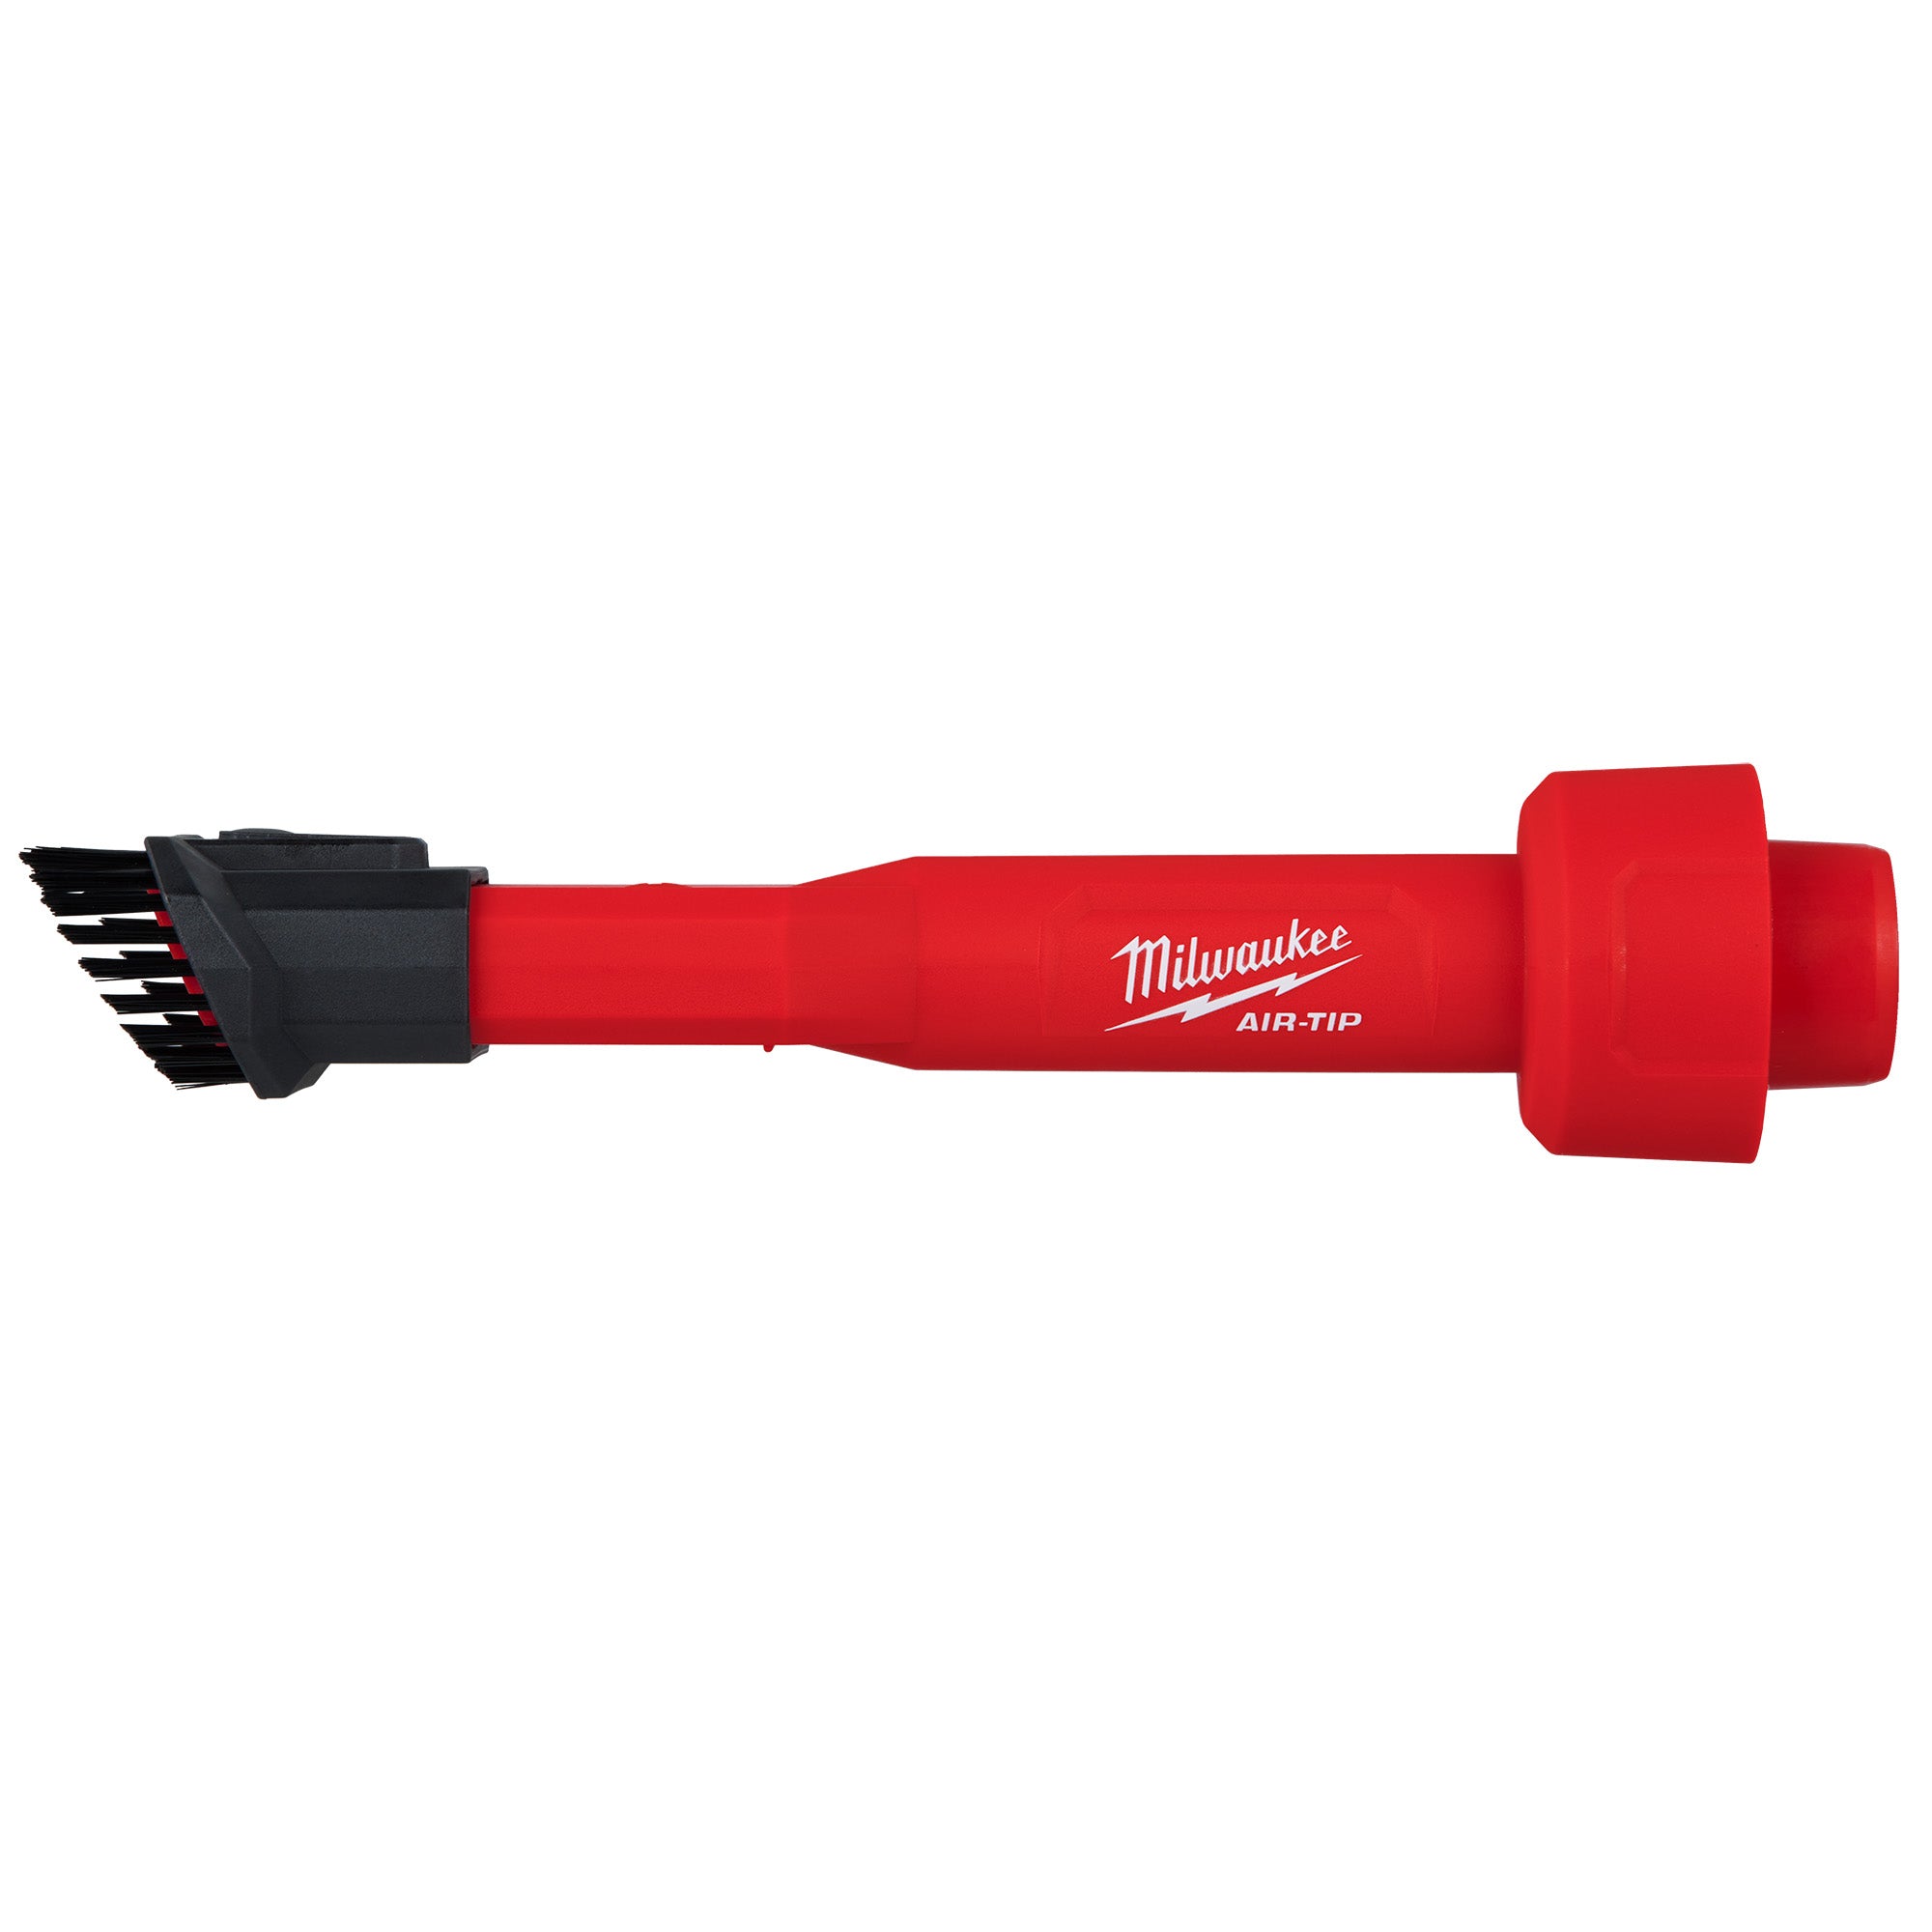 AIR-TIP 2-in-1 Utility Brush Tool